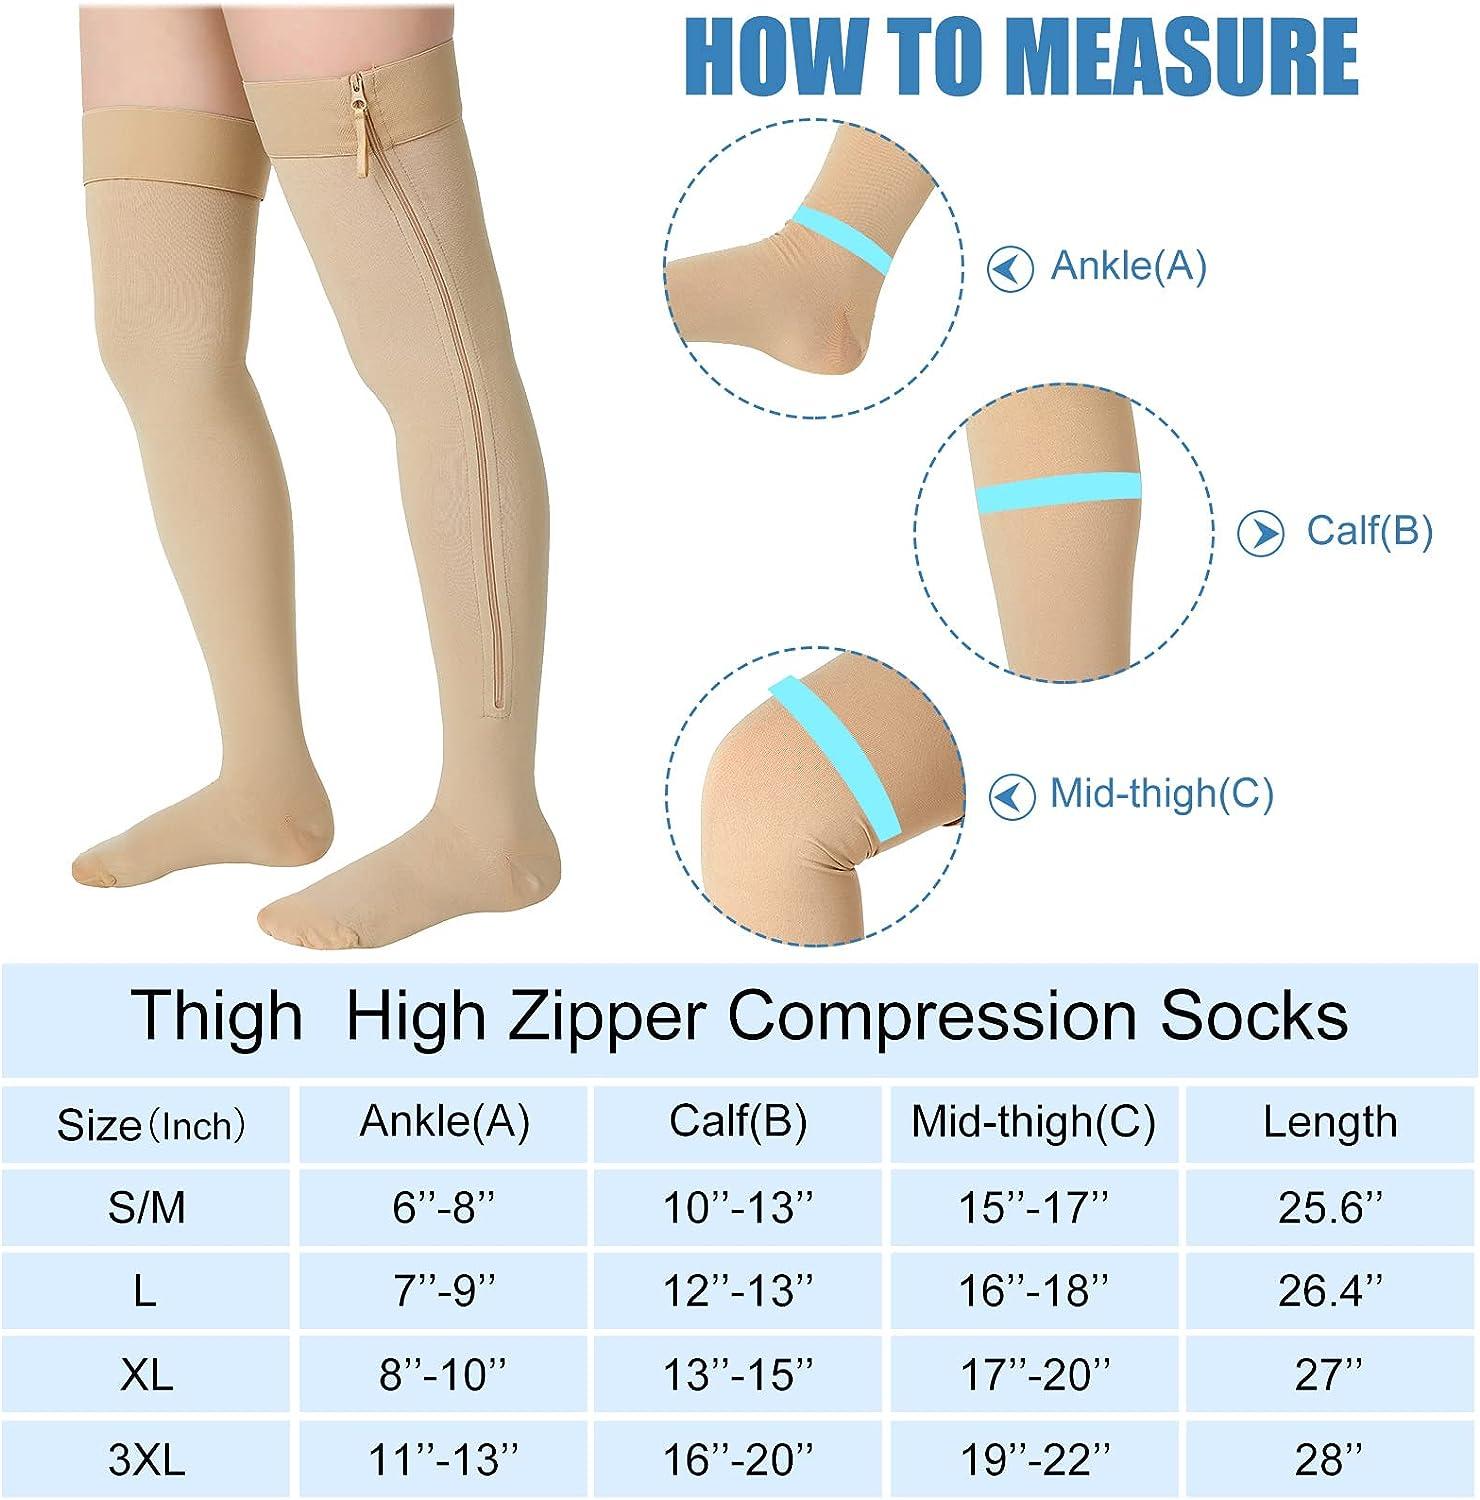 Zipper compression stockings